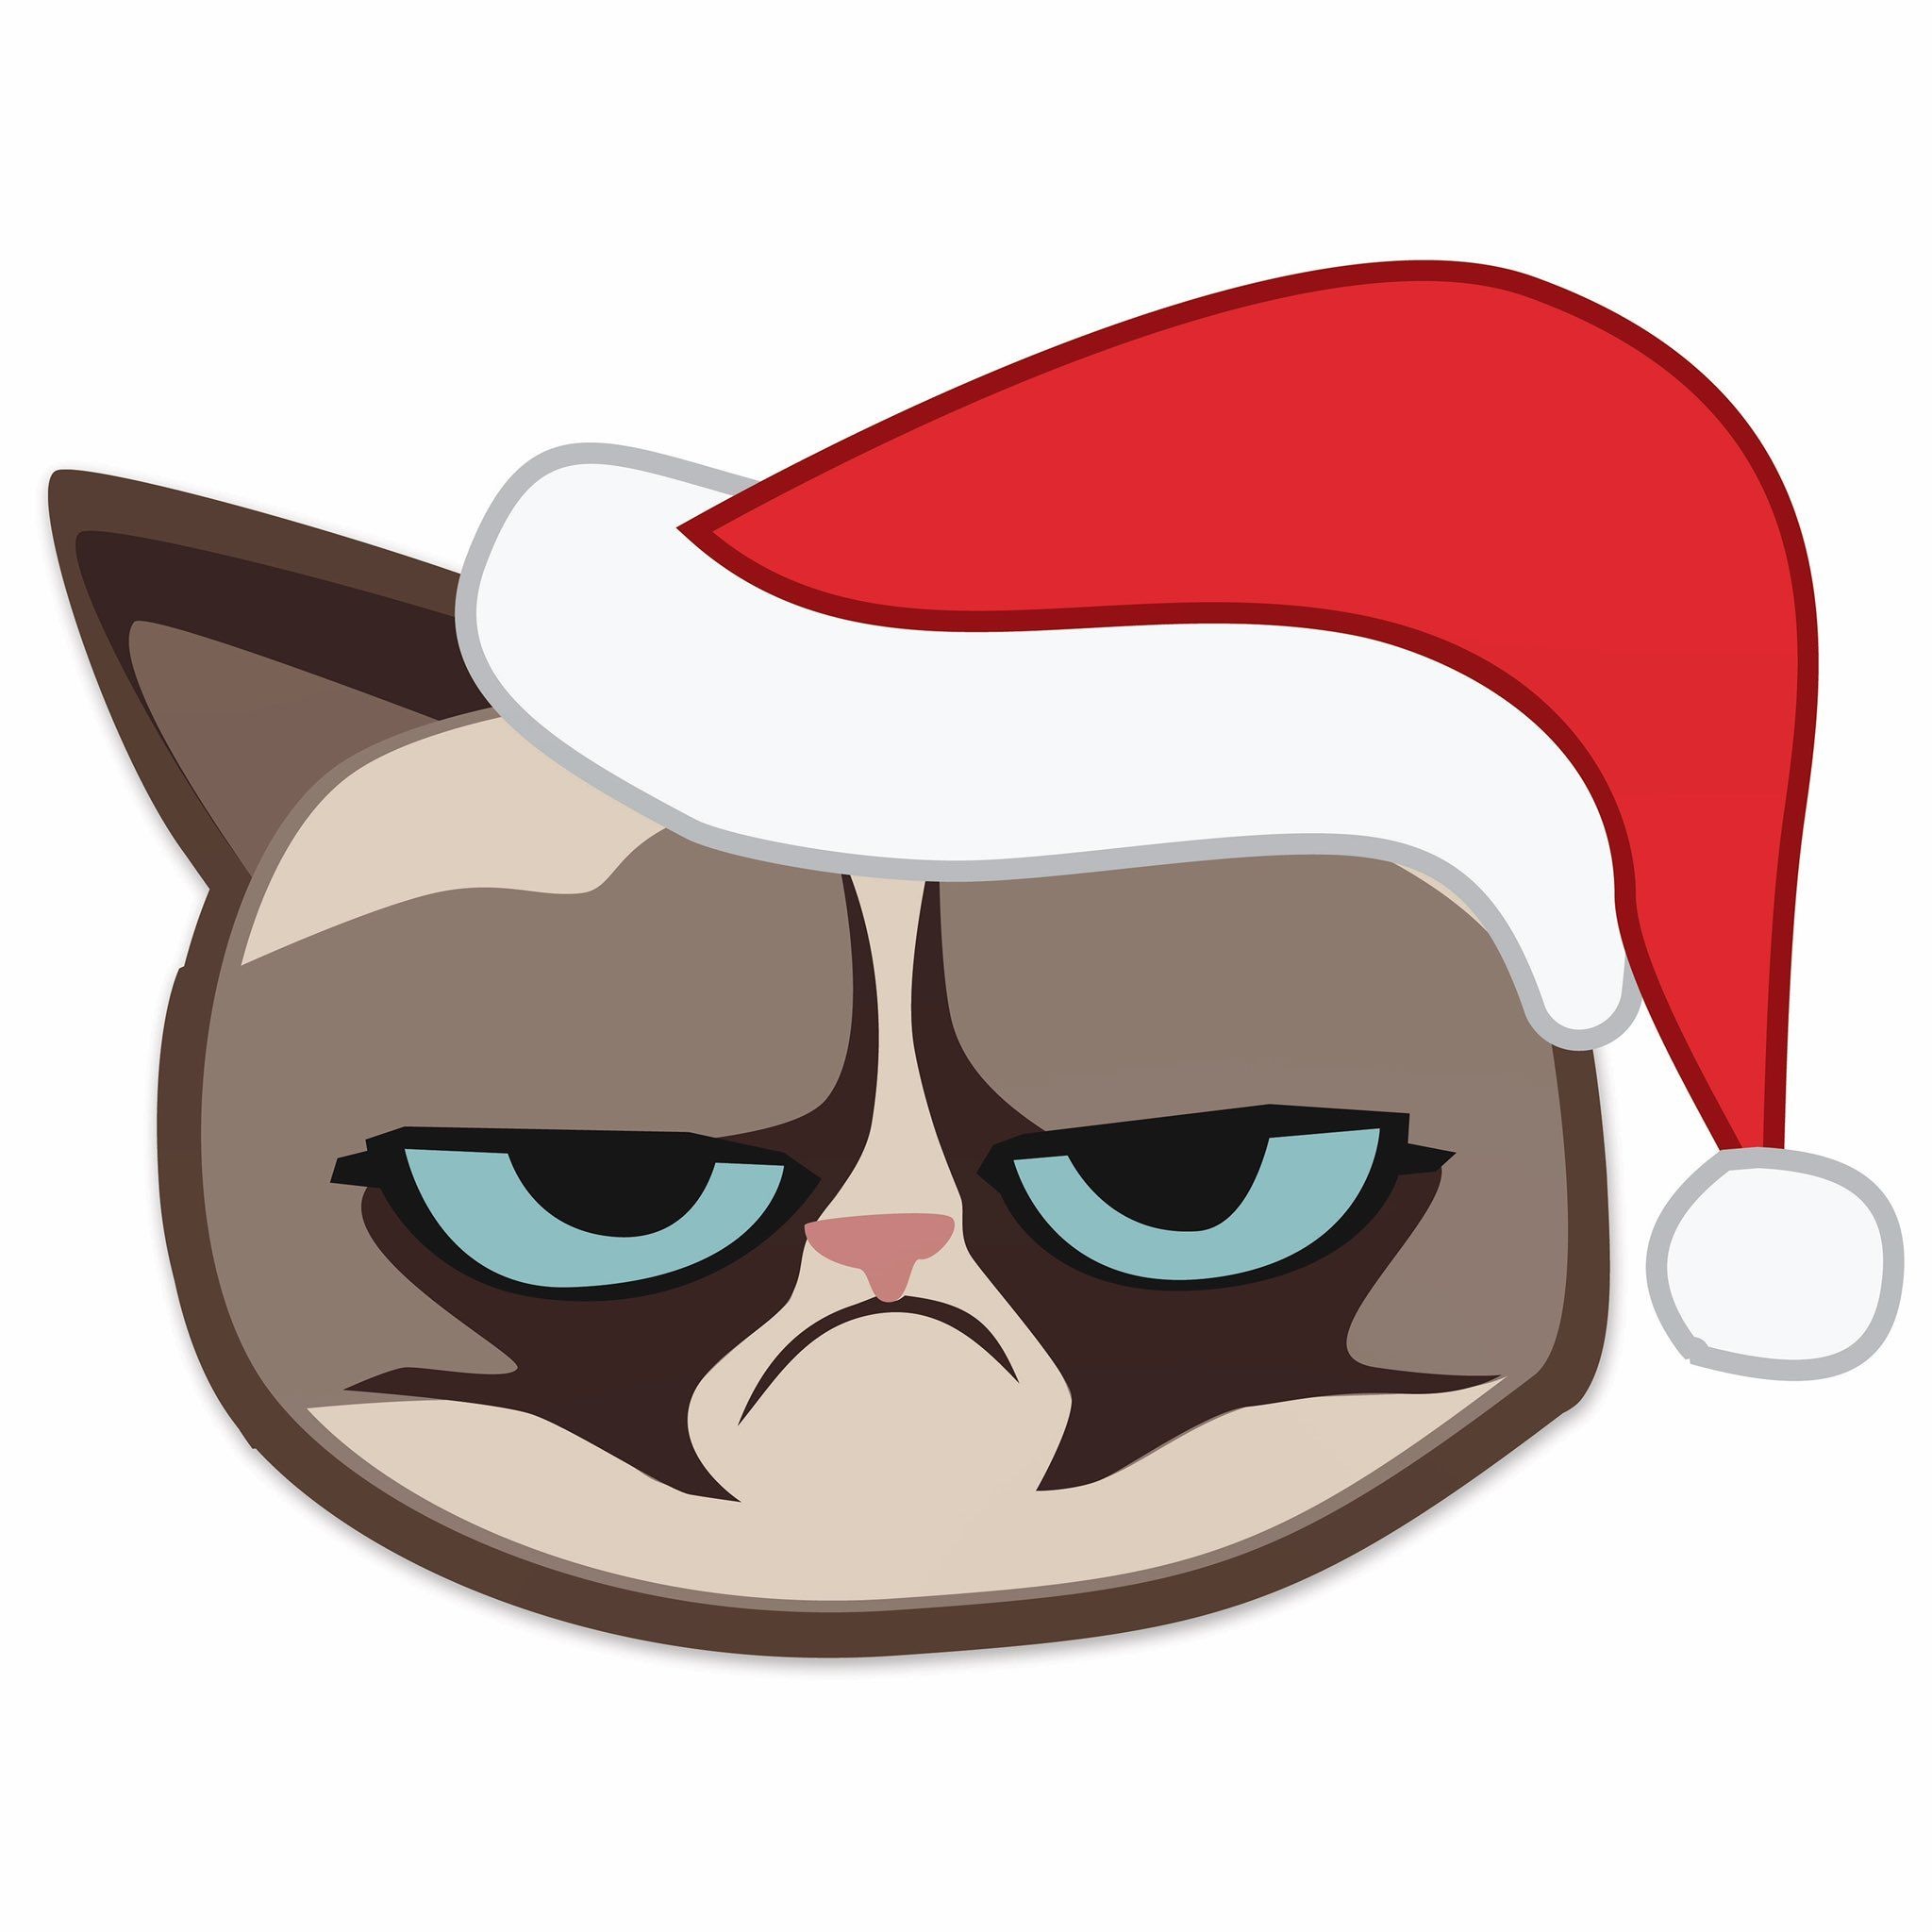 Grumpy Cat on Twitter, Grumpy Cat art, Grumpy Cat's signature expression, Grumpy feline face, 2050x2050 HD Handy